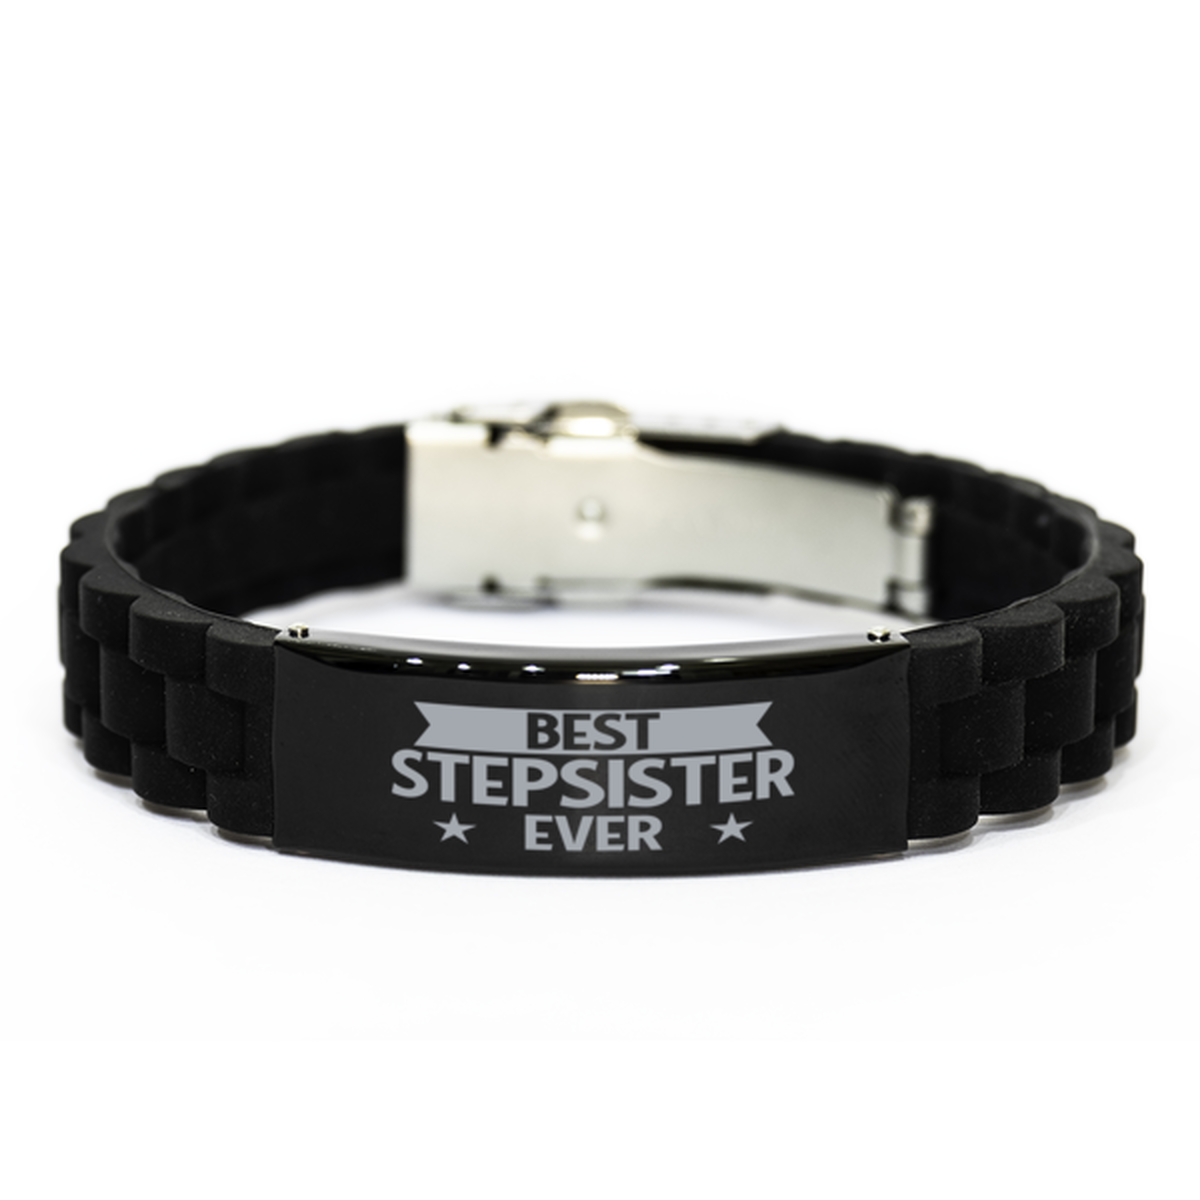 Best Stepsister Ever Stepsister Gifts, Funny Black Engraved Bracelet For Stepsister, Family Gifts For Women